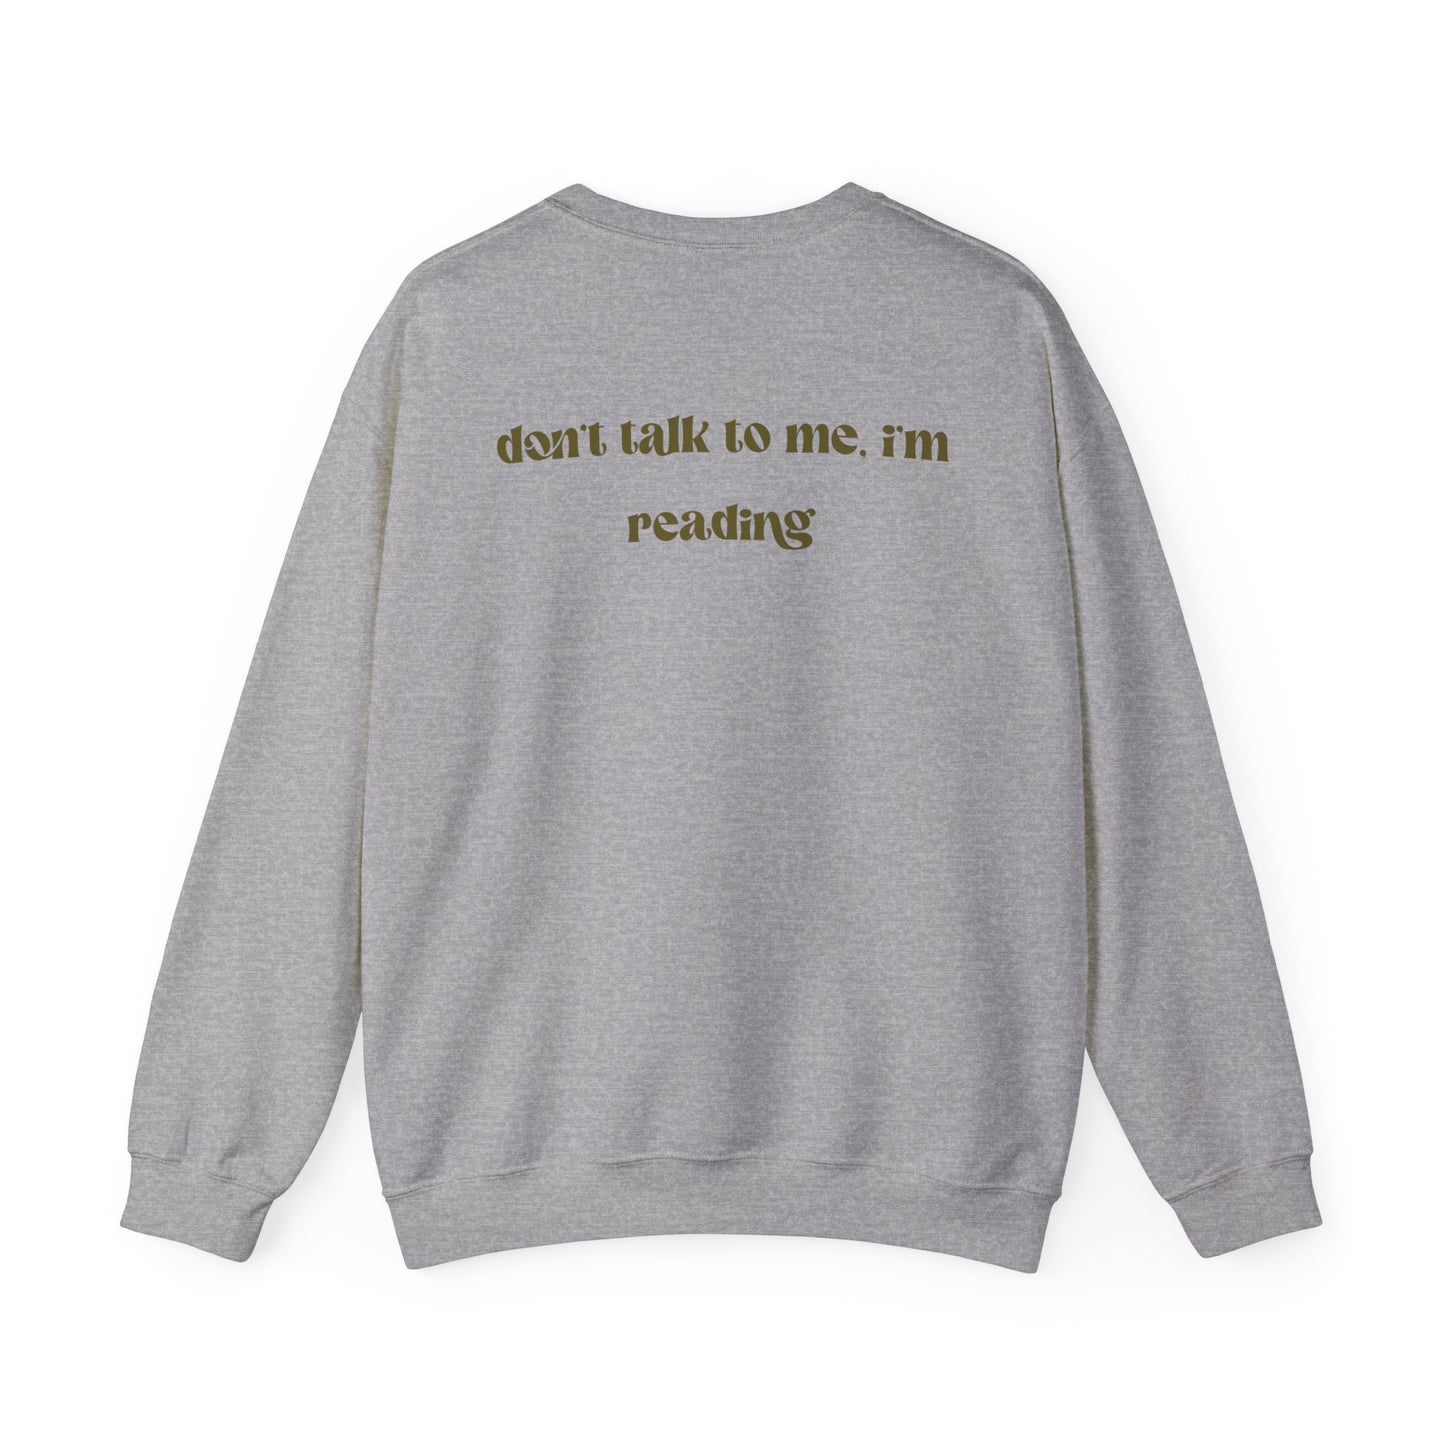 i’m reading sweatshirt